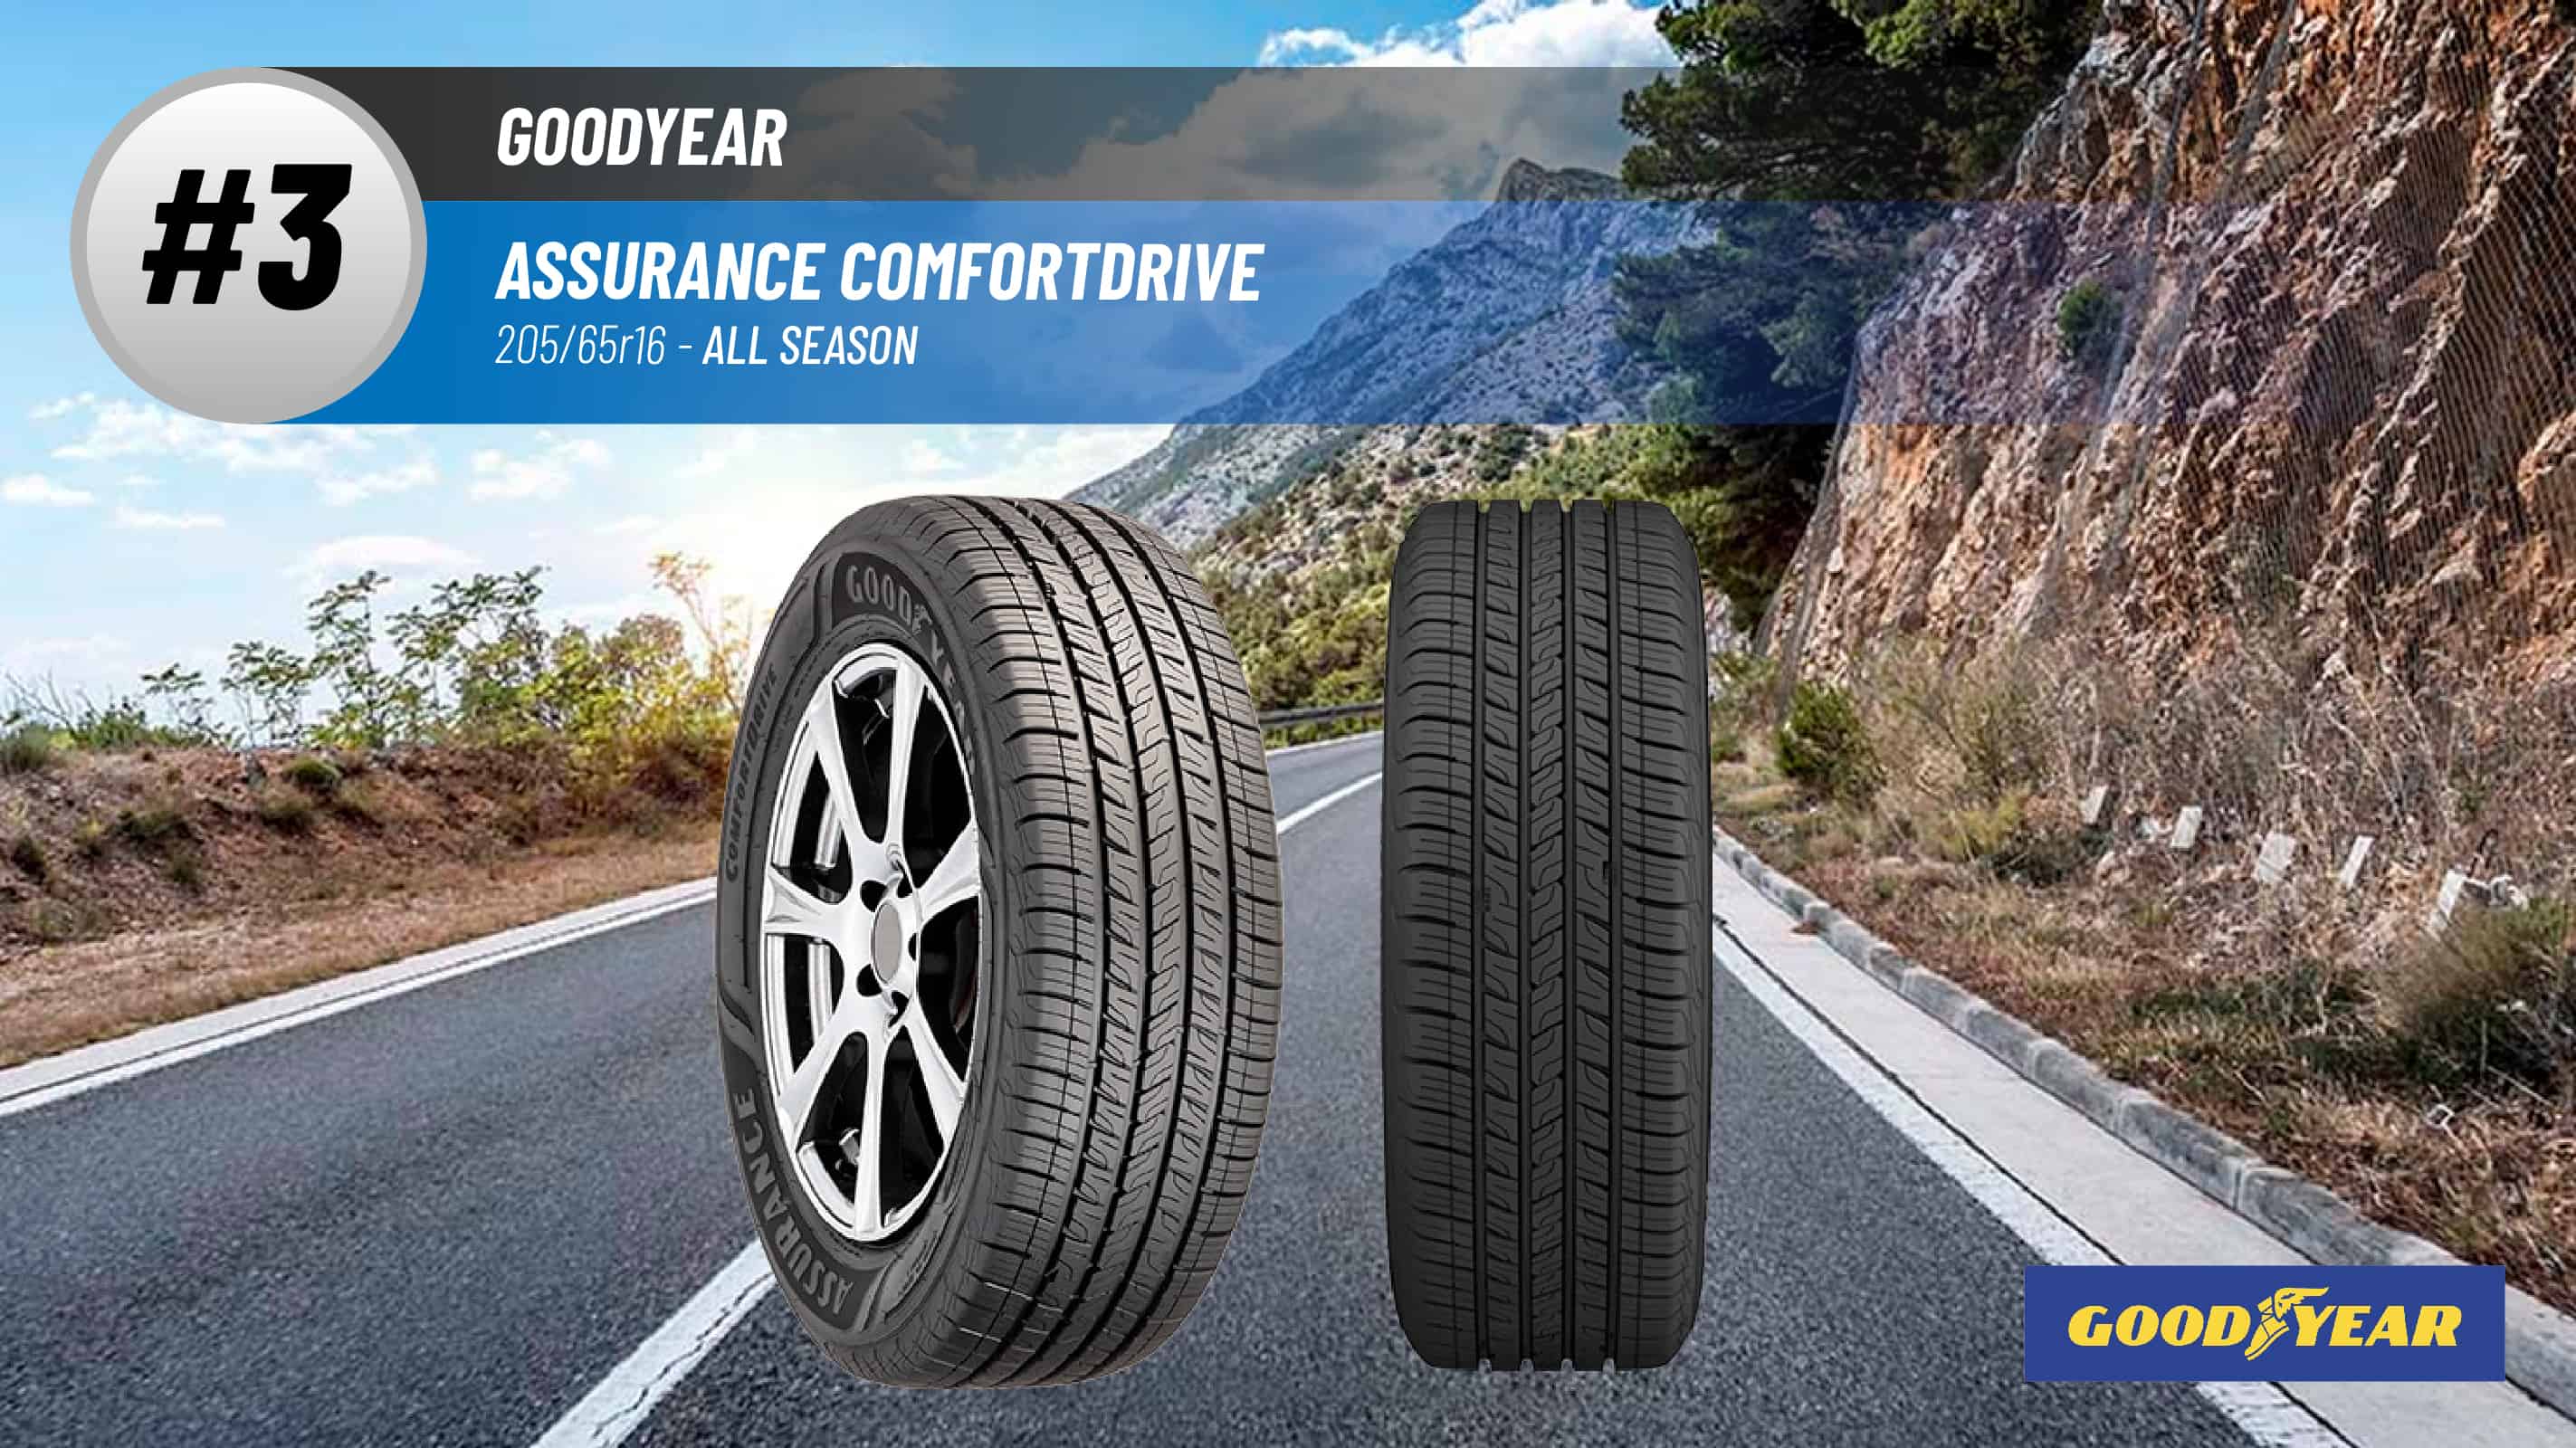 Top #3 All Season Tires: Goodyear Assurance Comfortdrive –best 205/65 R16